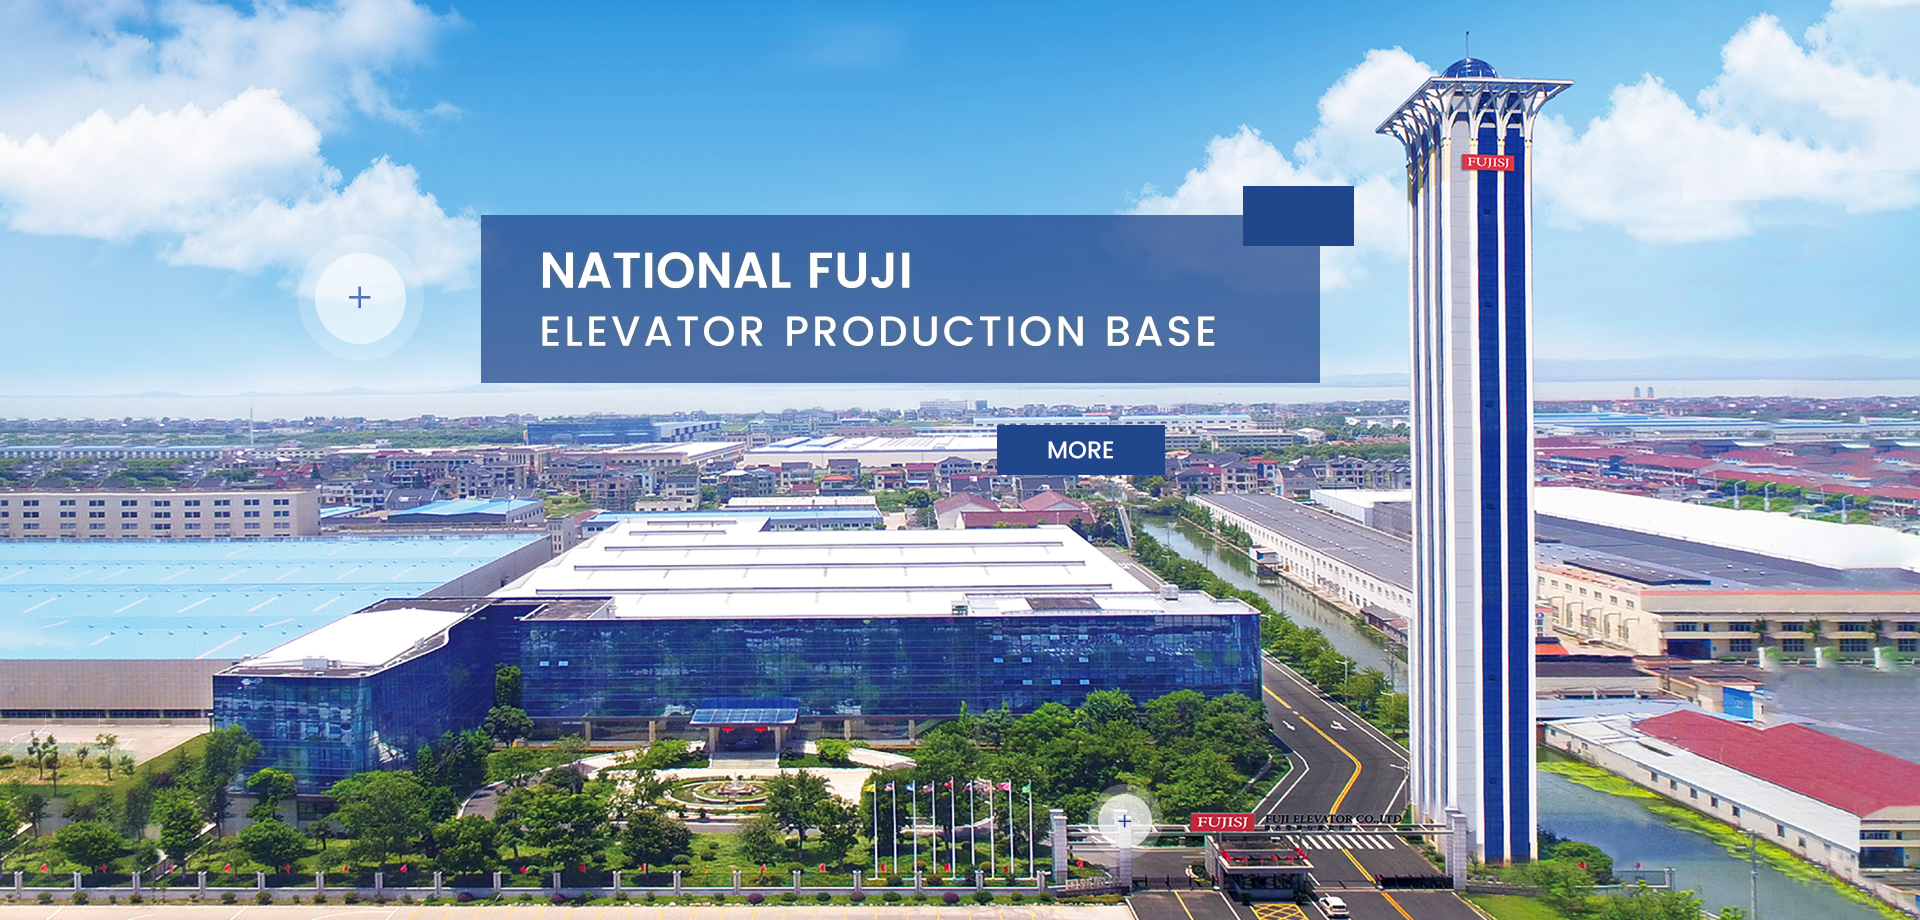 Base de producción nacional de ascensores Fuji